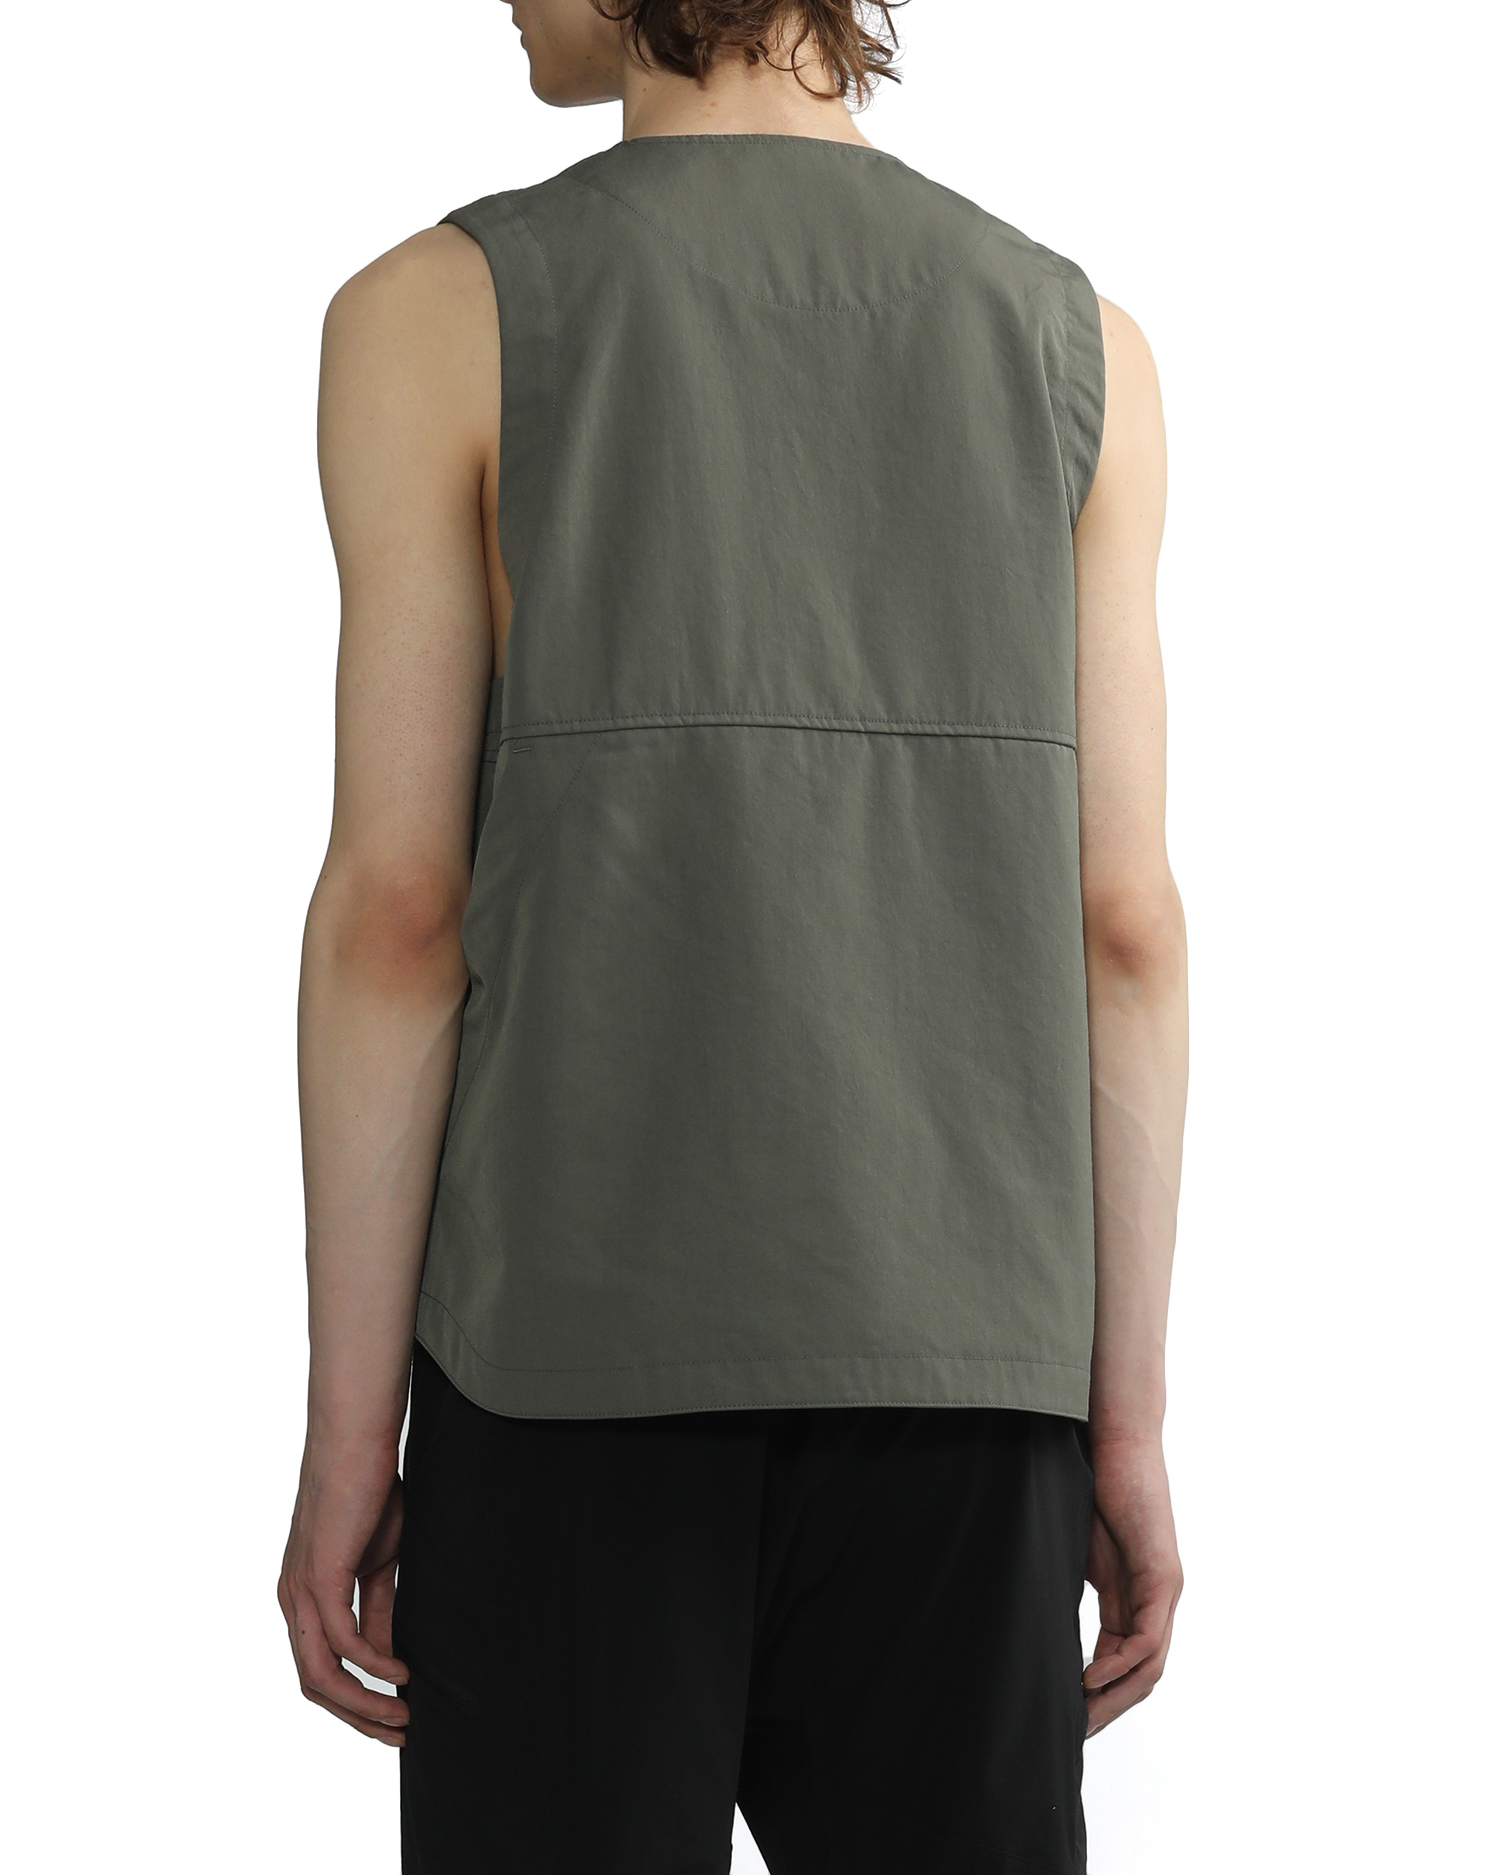 Takibi weather cloth vest